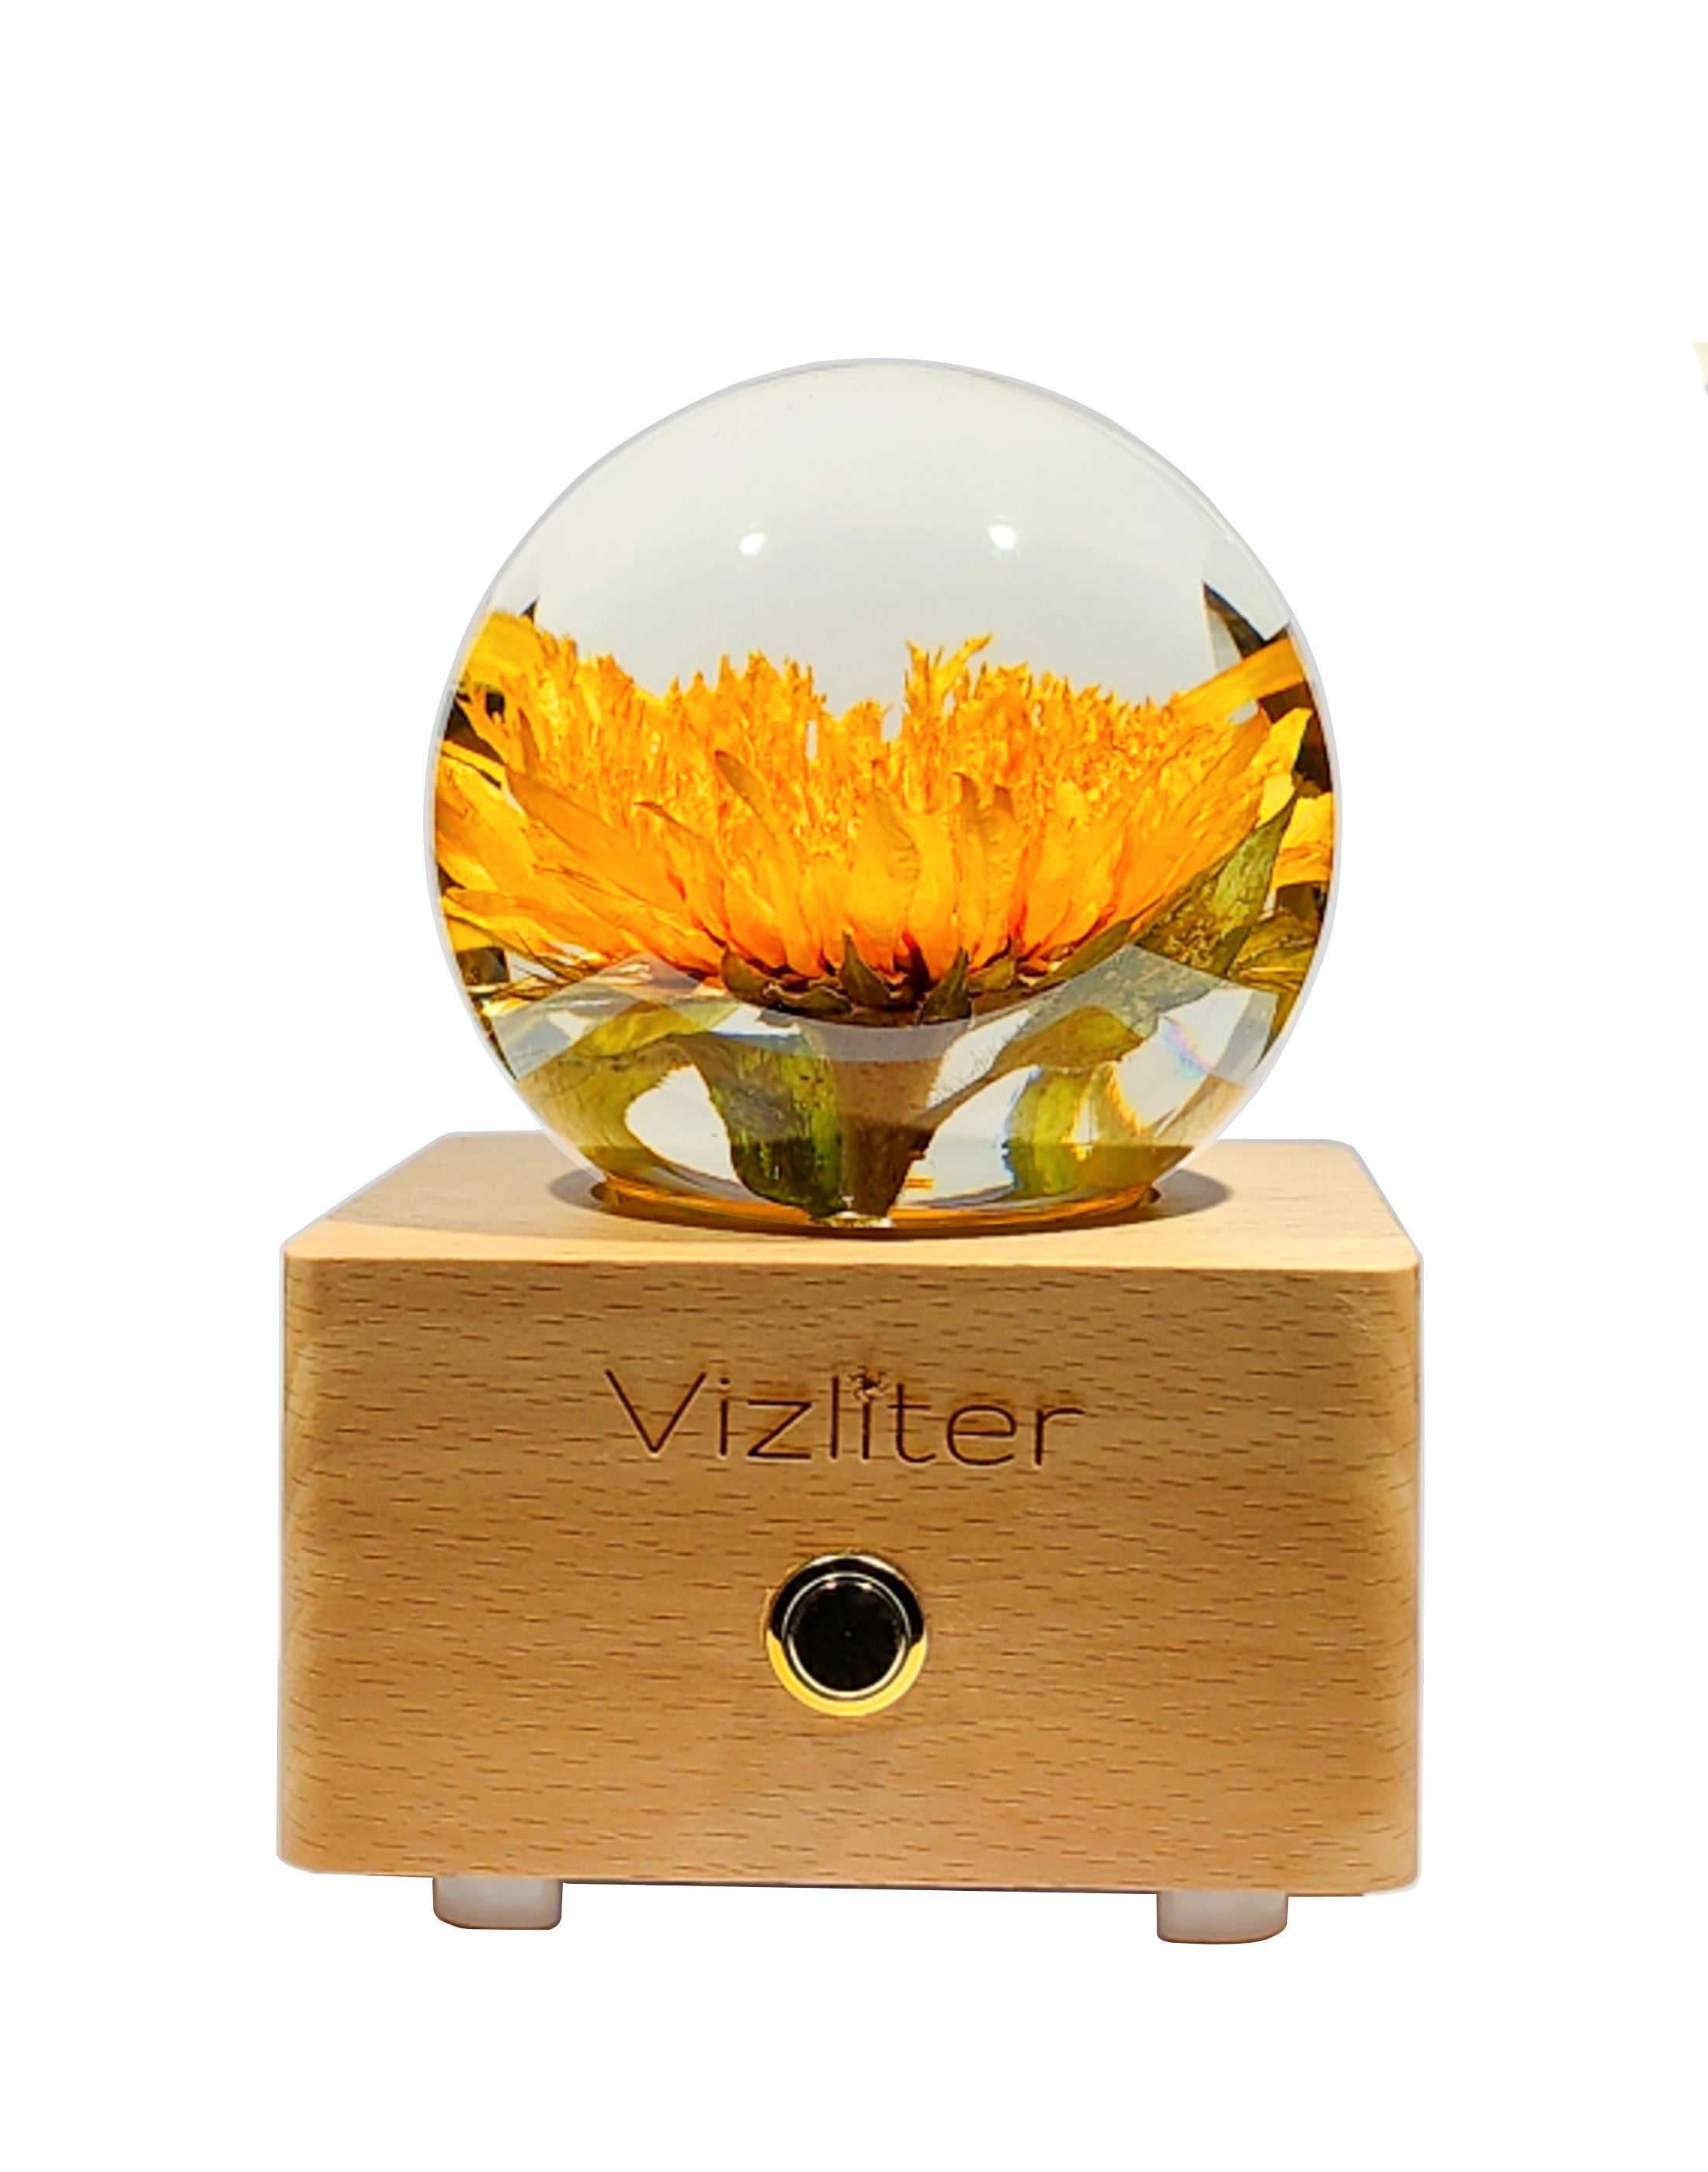 Vizliter Bluetooth Speaker Crystal Ball LED 80mm Lighting Premium Preserved Natural Flower with Wood Base Never Withered Eternal Night Light Sunflower